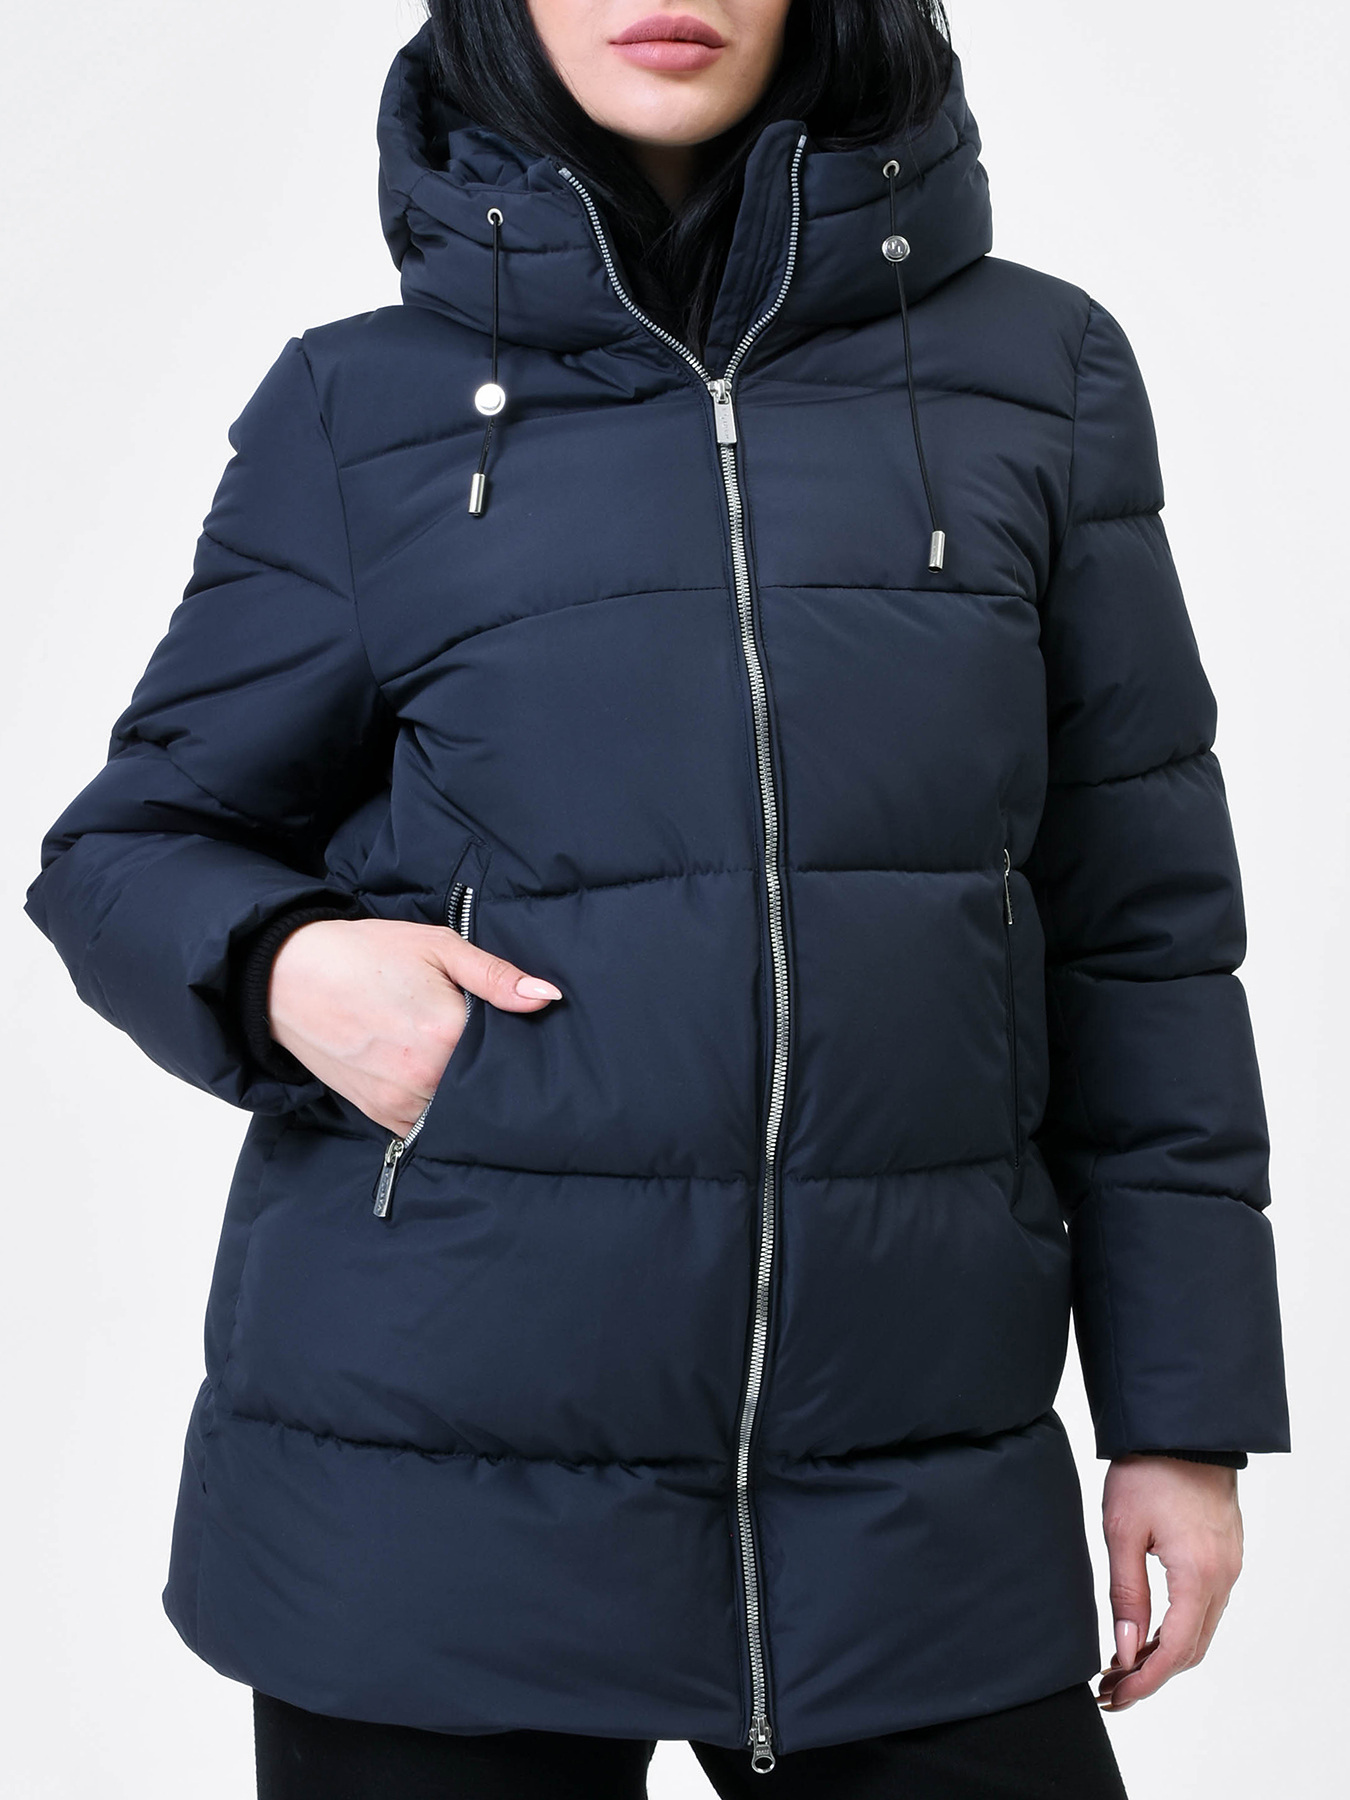 Пальто зимнее Maritta 433612-024, цвет темно-синий, размер 52 - фото 1